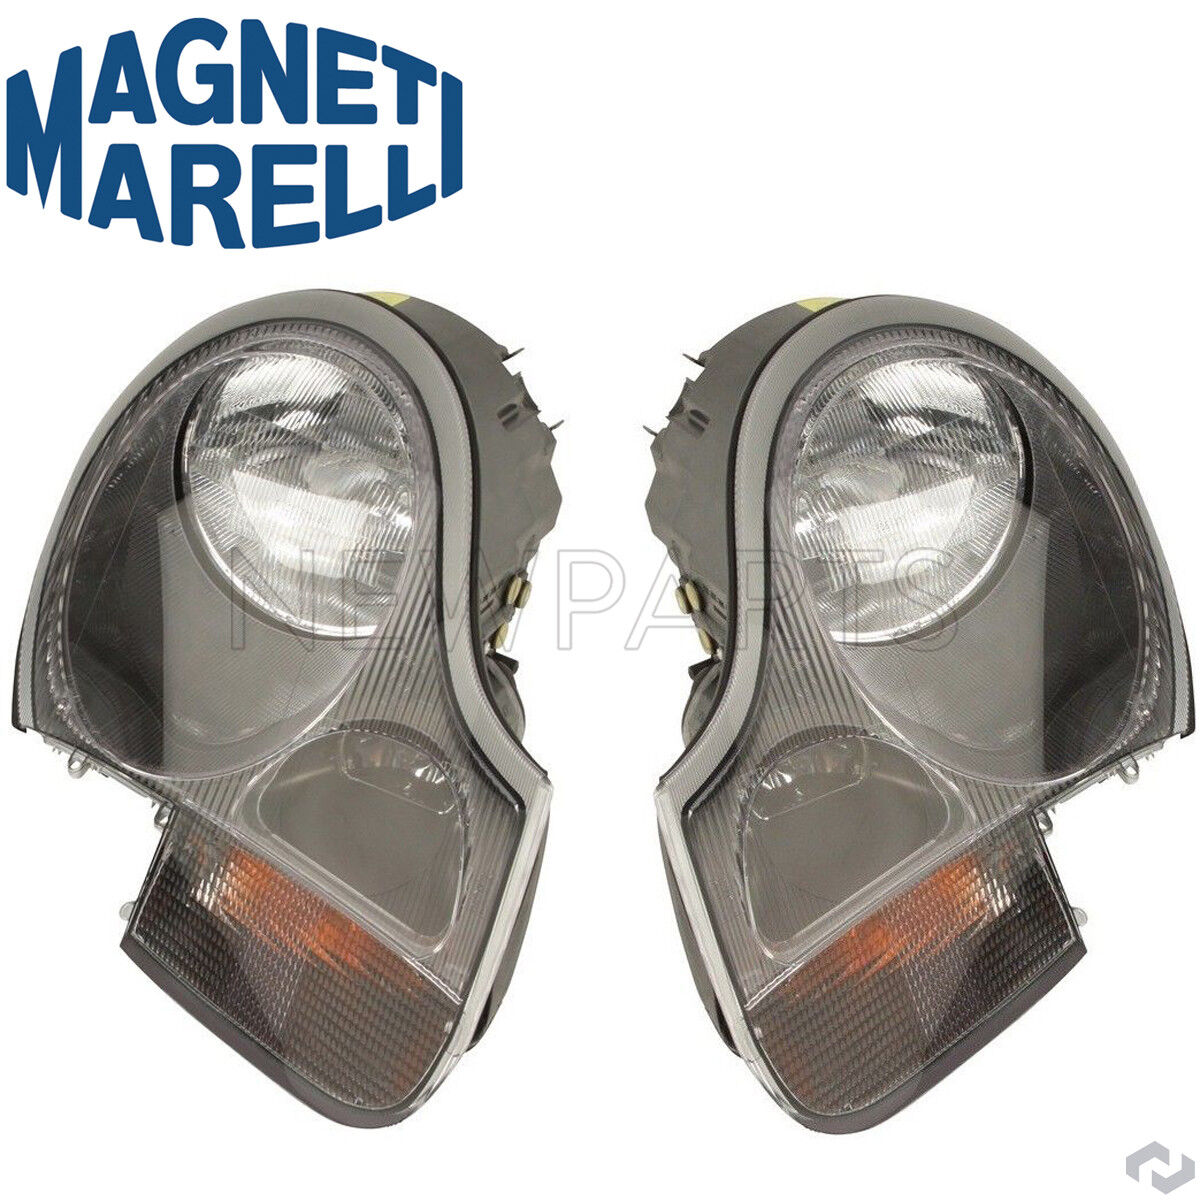 For Porsche Boxster Pair Set of Left & Right Headlight Halogen Assies Marelli